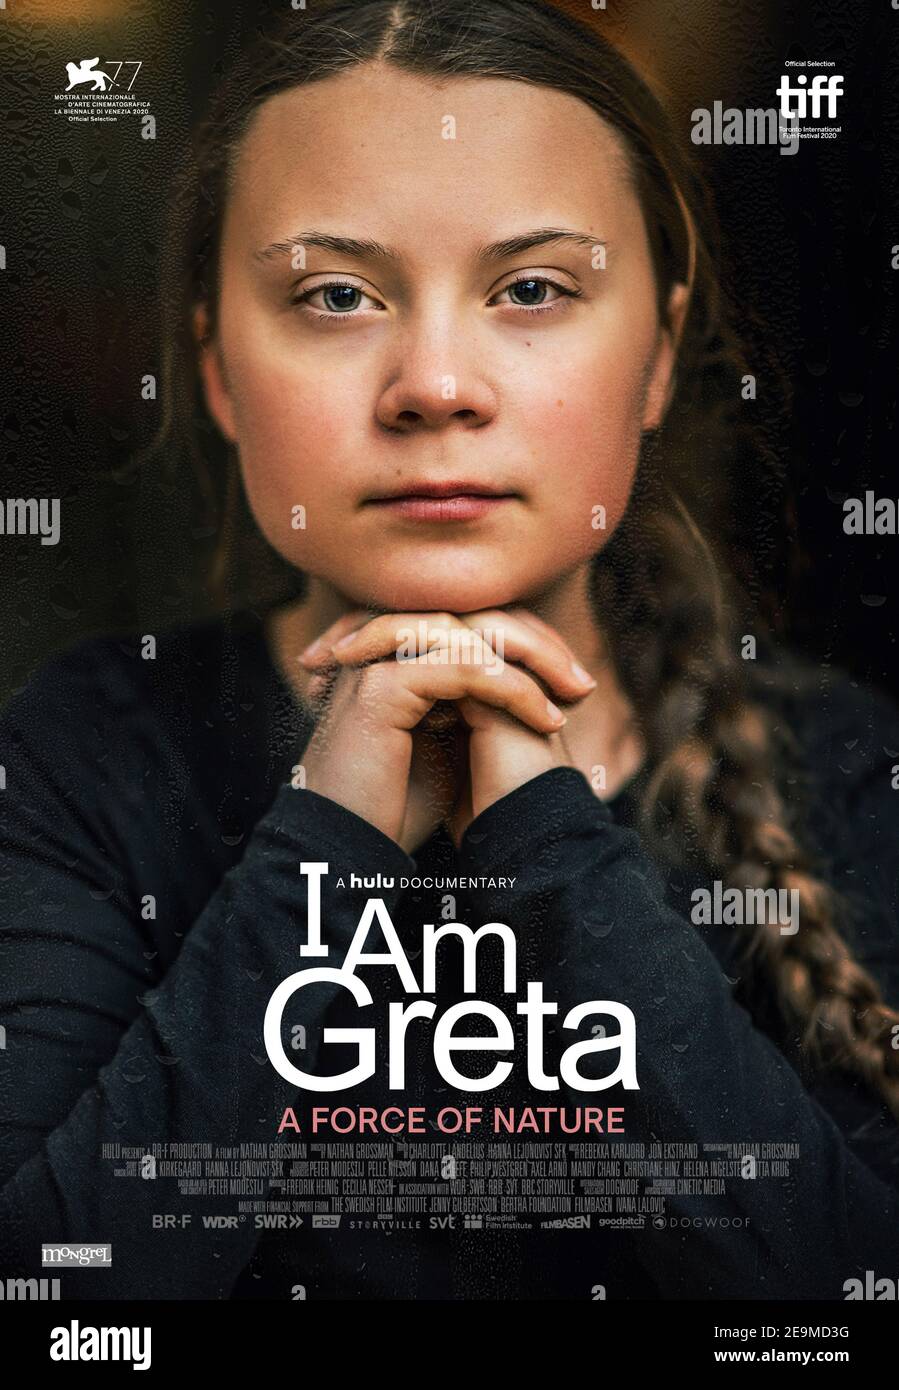 I Am Greta (2020) directed by Nathan Grossman and starring Greta Thunberg, Malena Ernman and Pope Francis. Documentary about Swedish teenage climate activist Greta Thunberg. Stock Photo